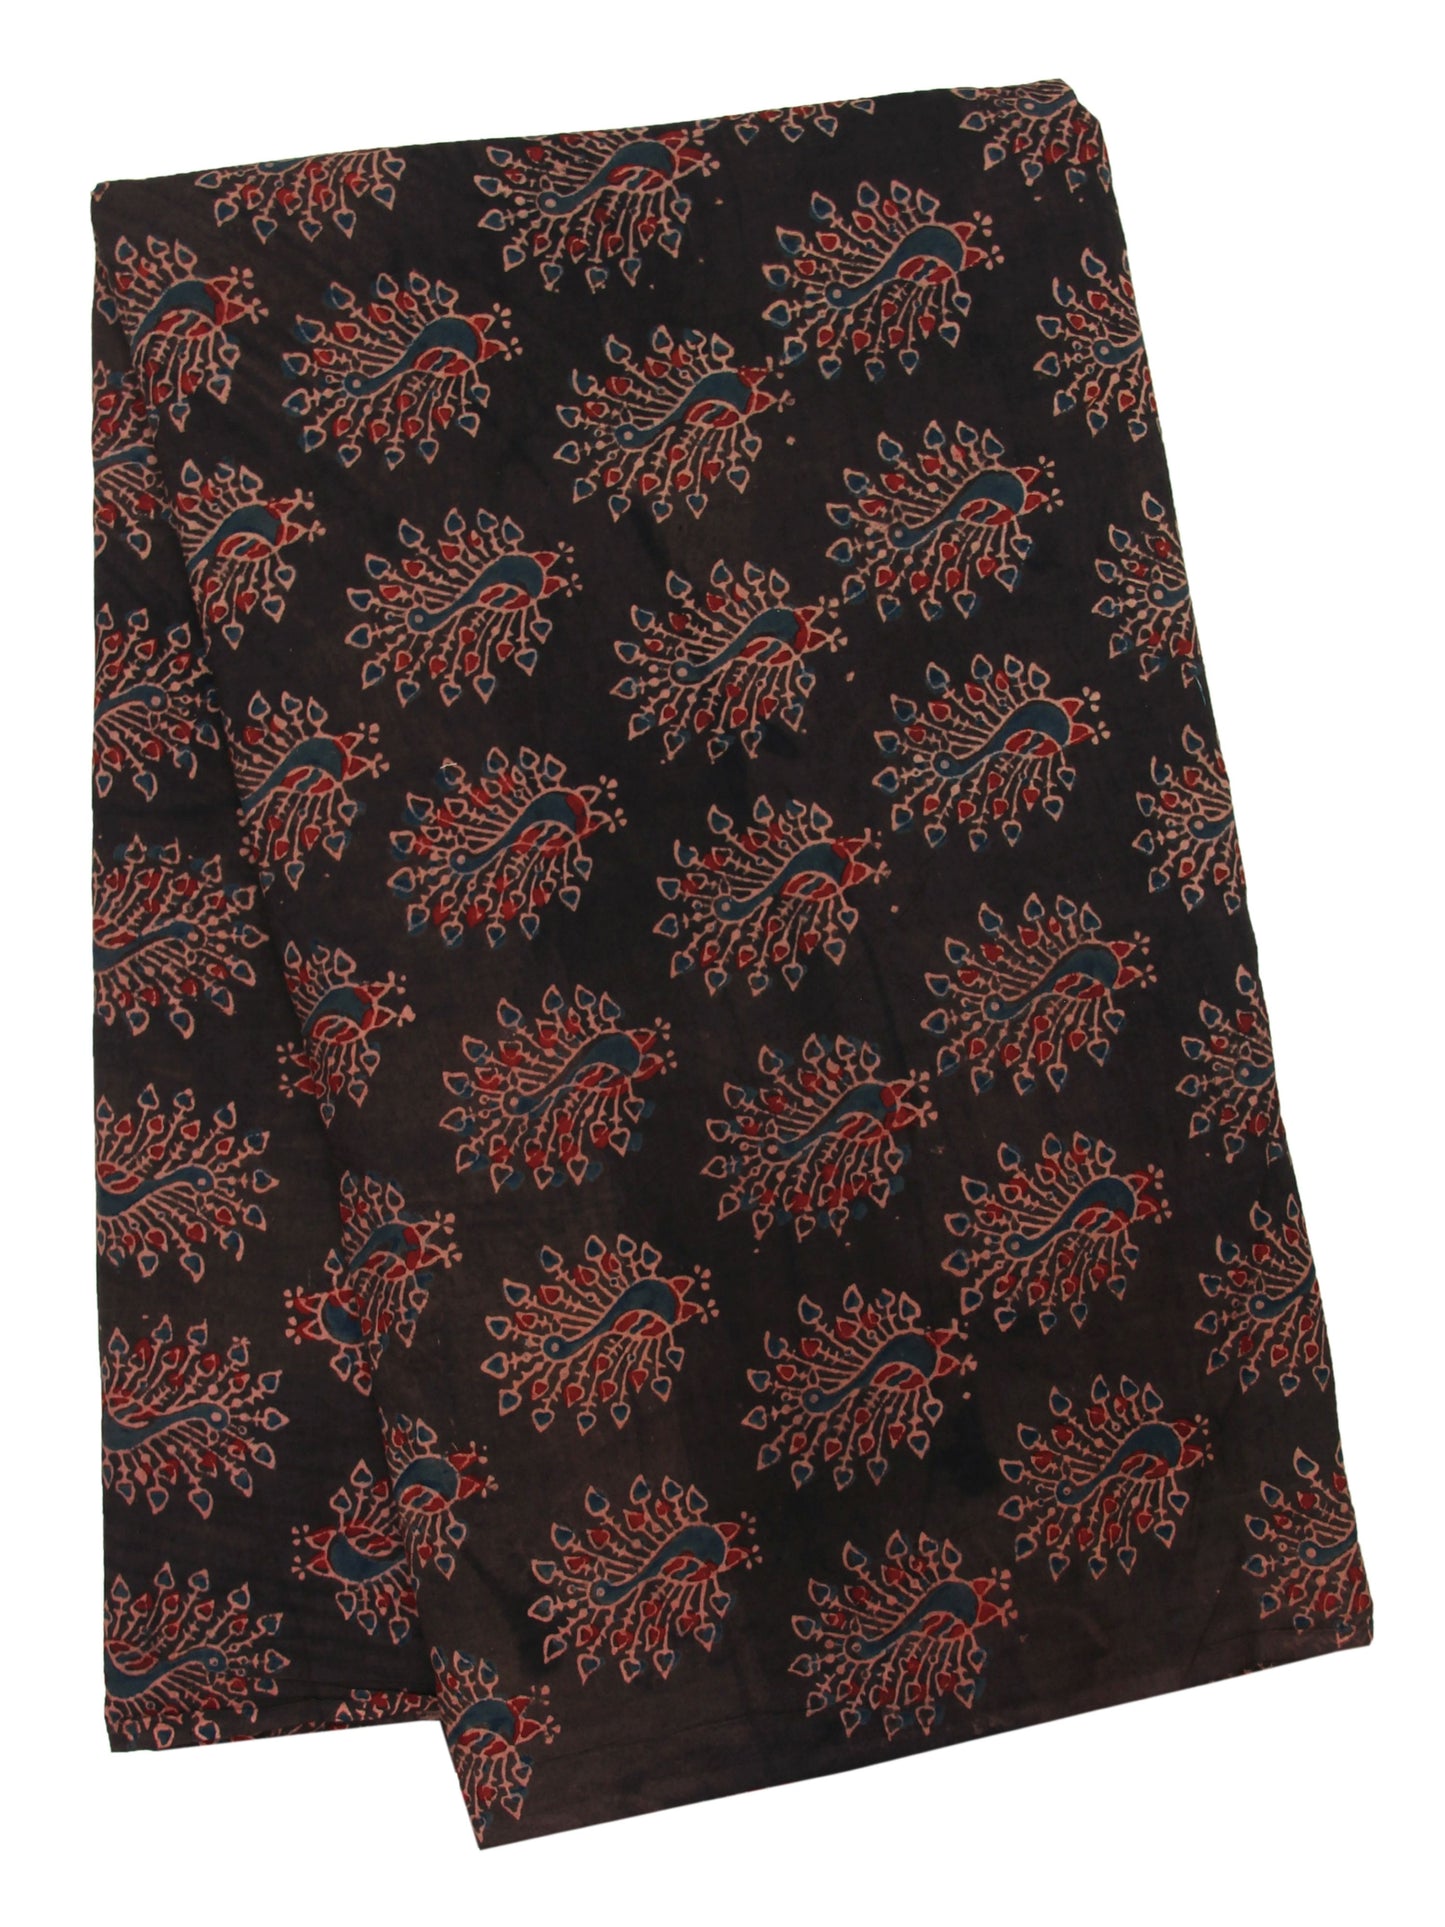 Peacock print ajrakh fabric, Deep brown ajrakh prints fabric, Slow fashion